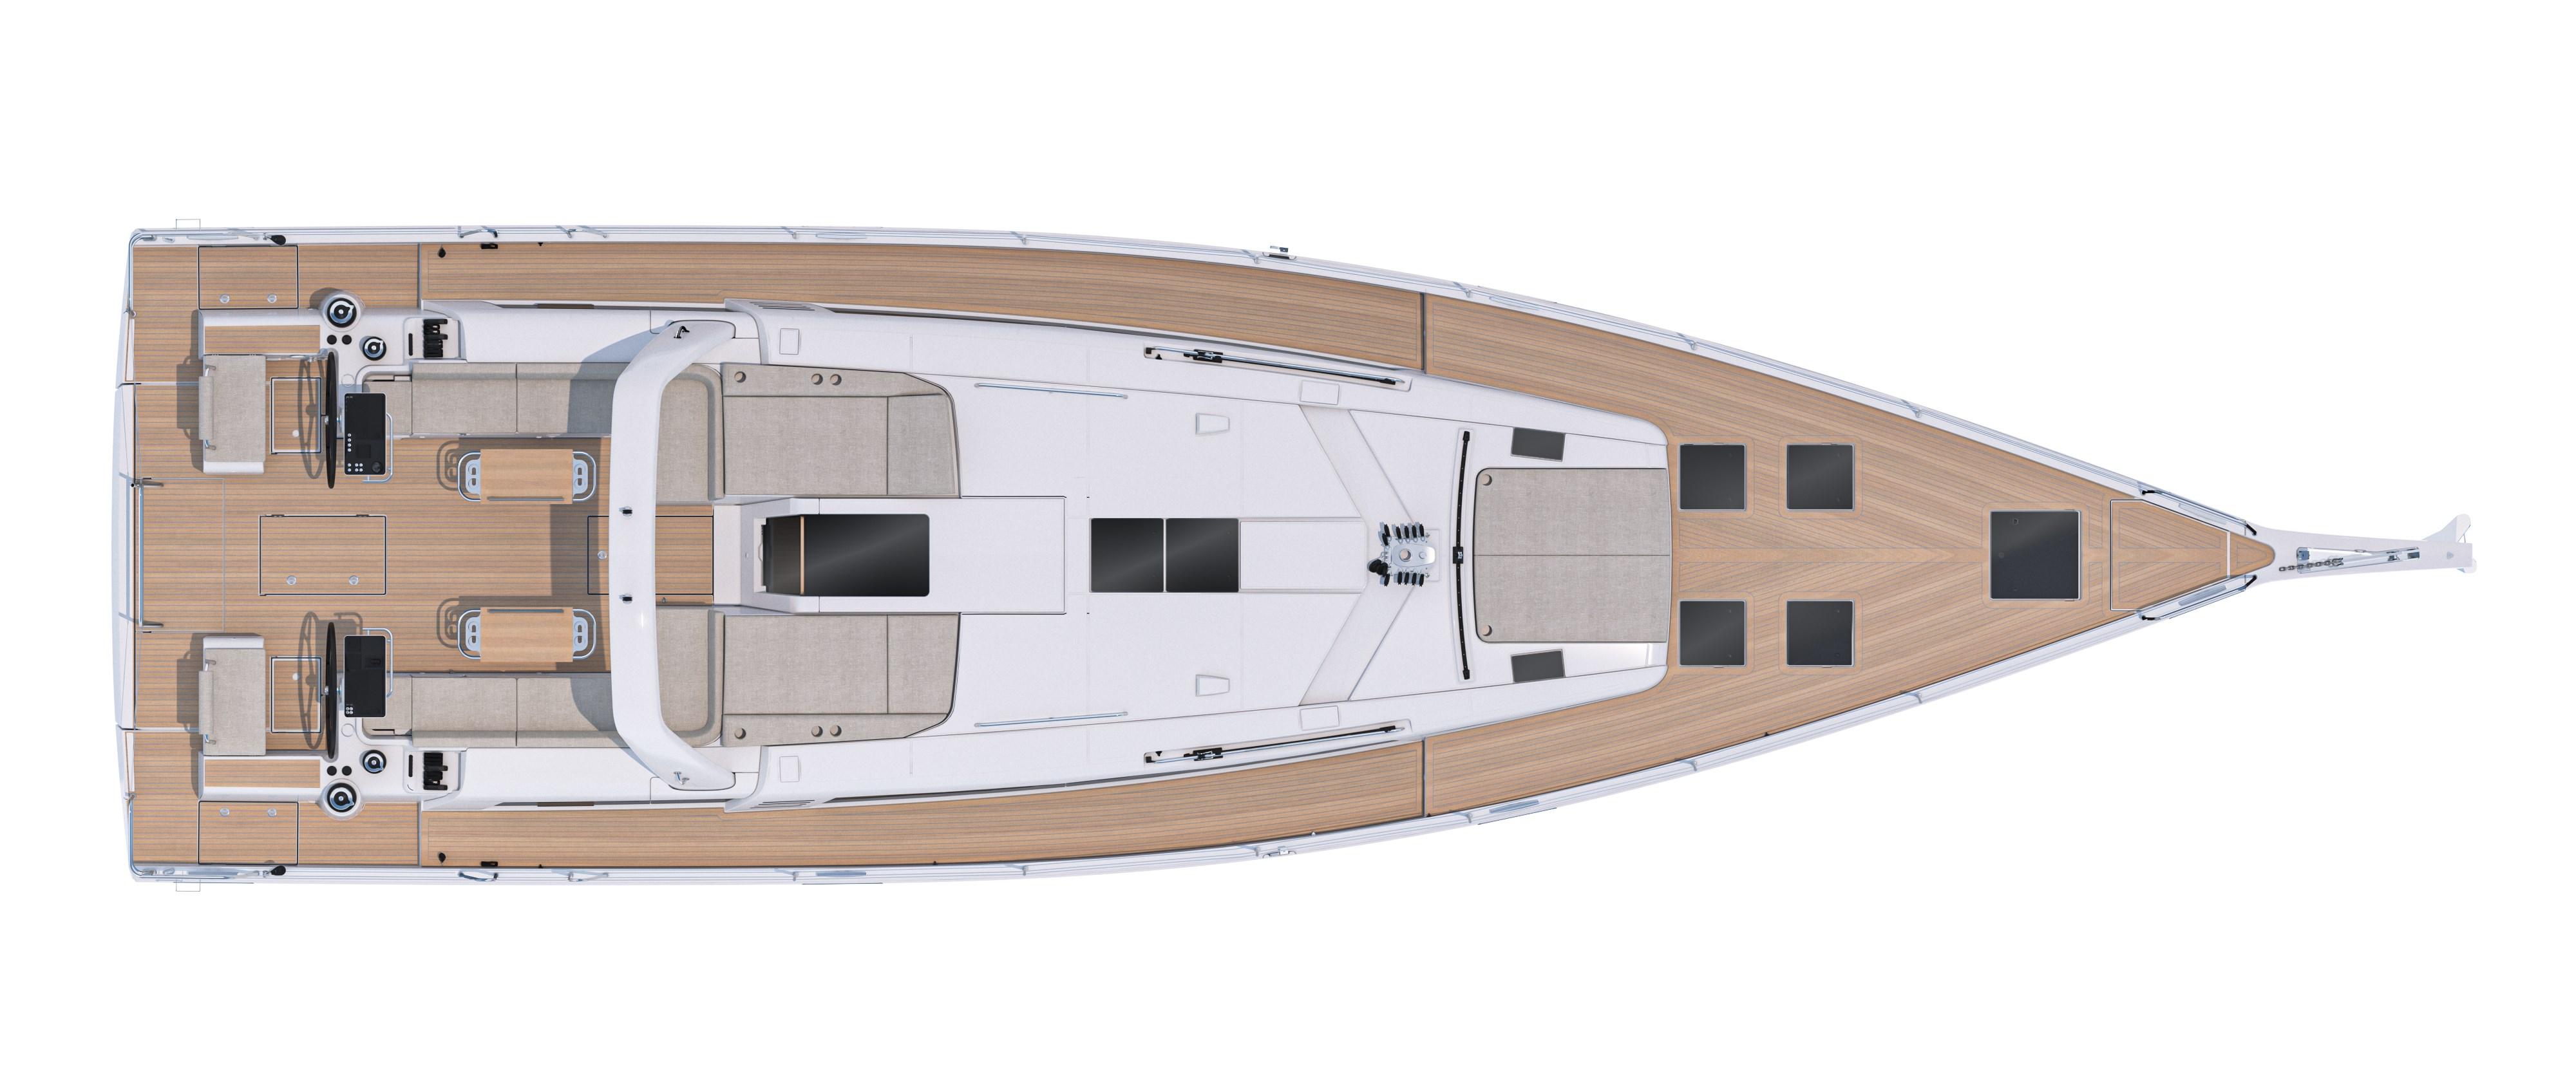 5x Natural Balsa Wood Strips 250mm Long for DIY Model-building Boat House